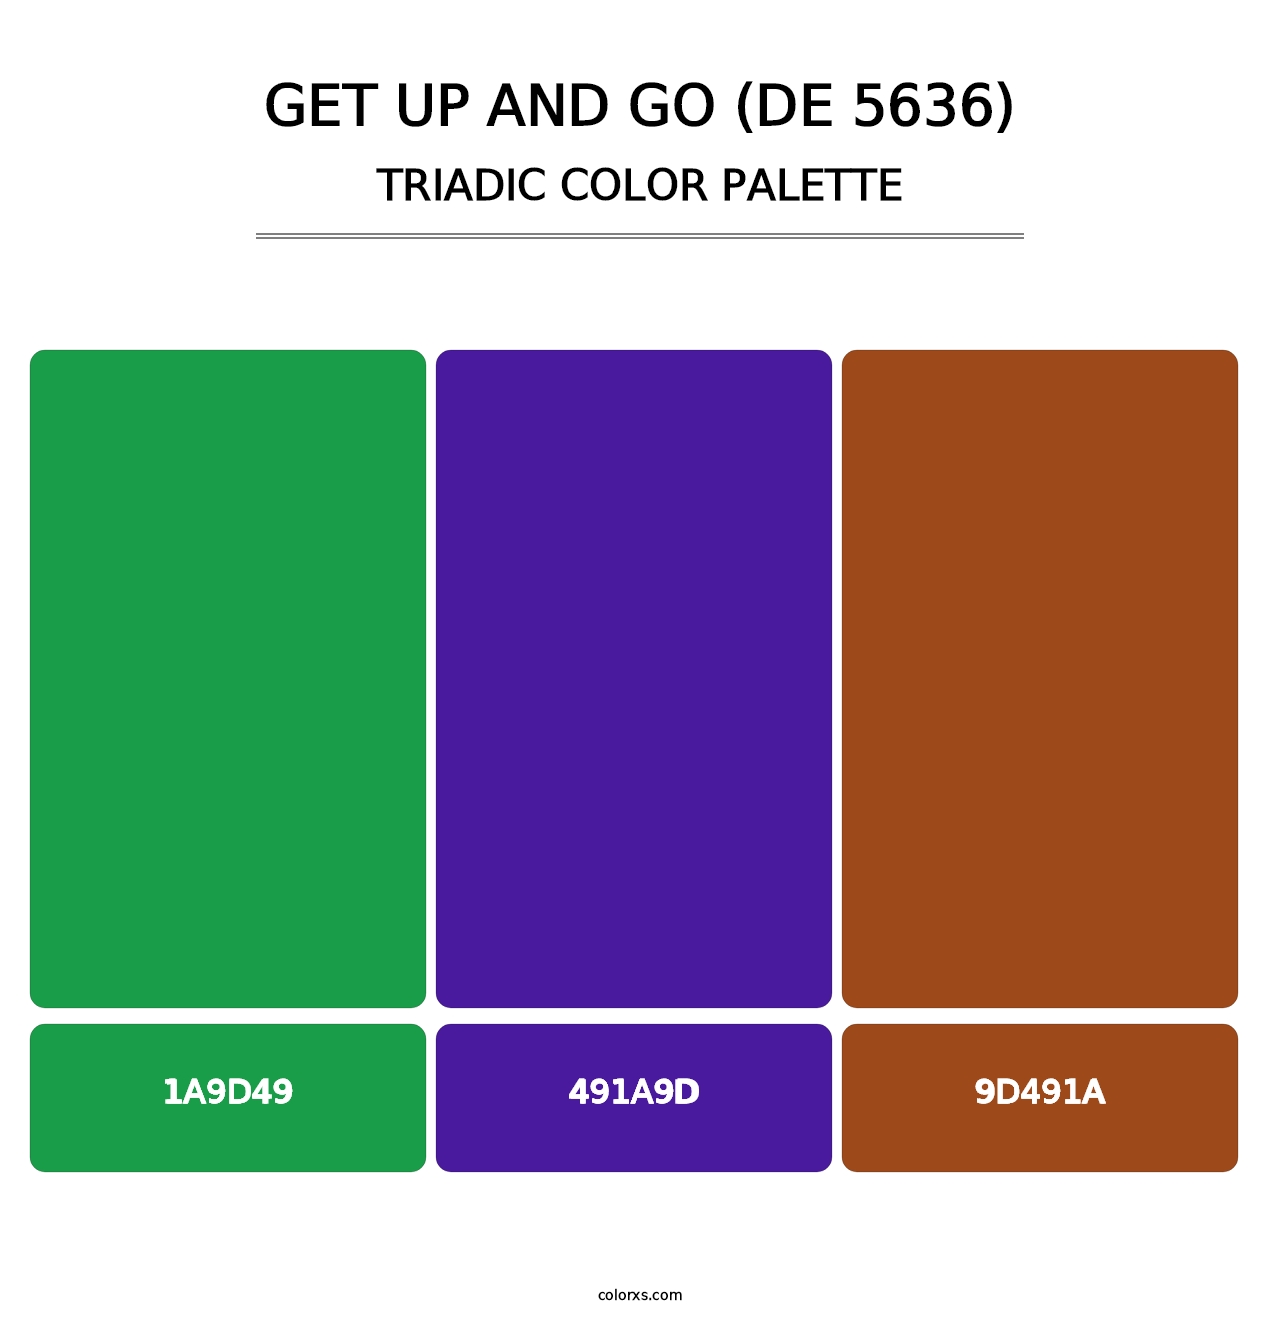 Get Up and Go (DE 5636) - Triadic Color Palette